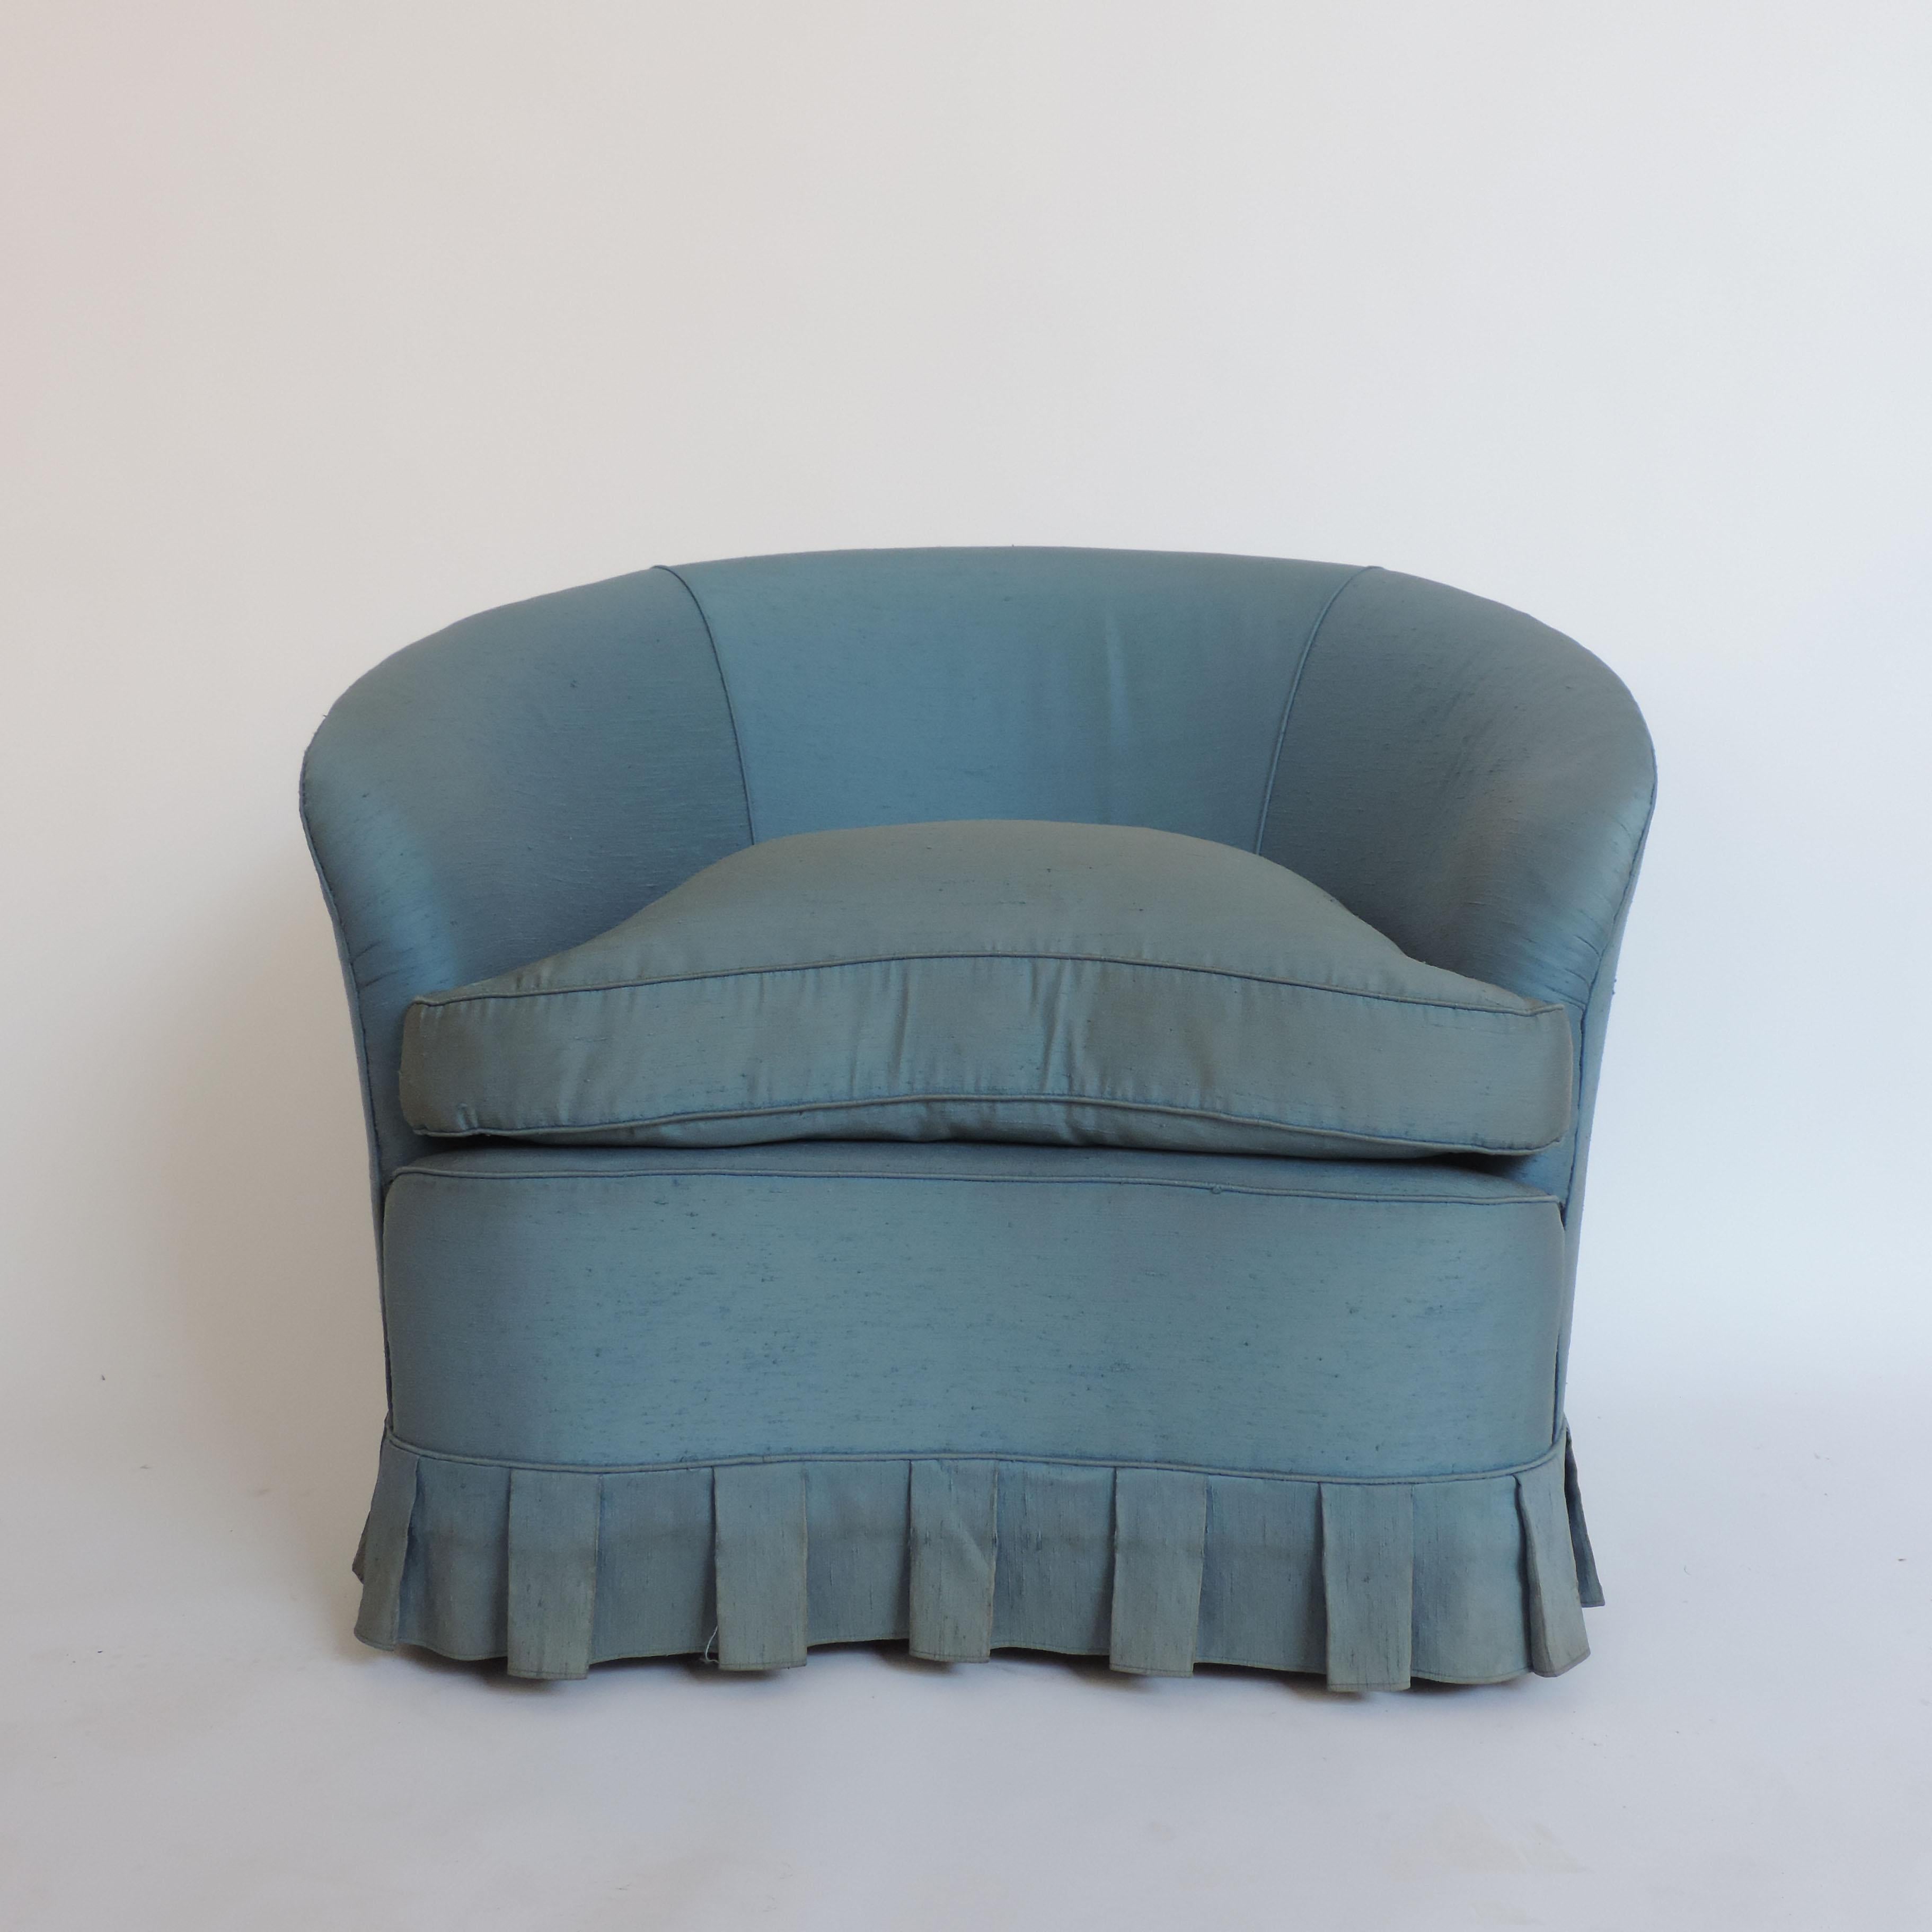 Pair of Italian 1940s armchairs in their original Blue Fabric.